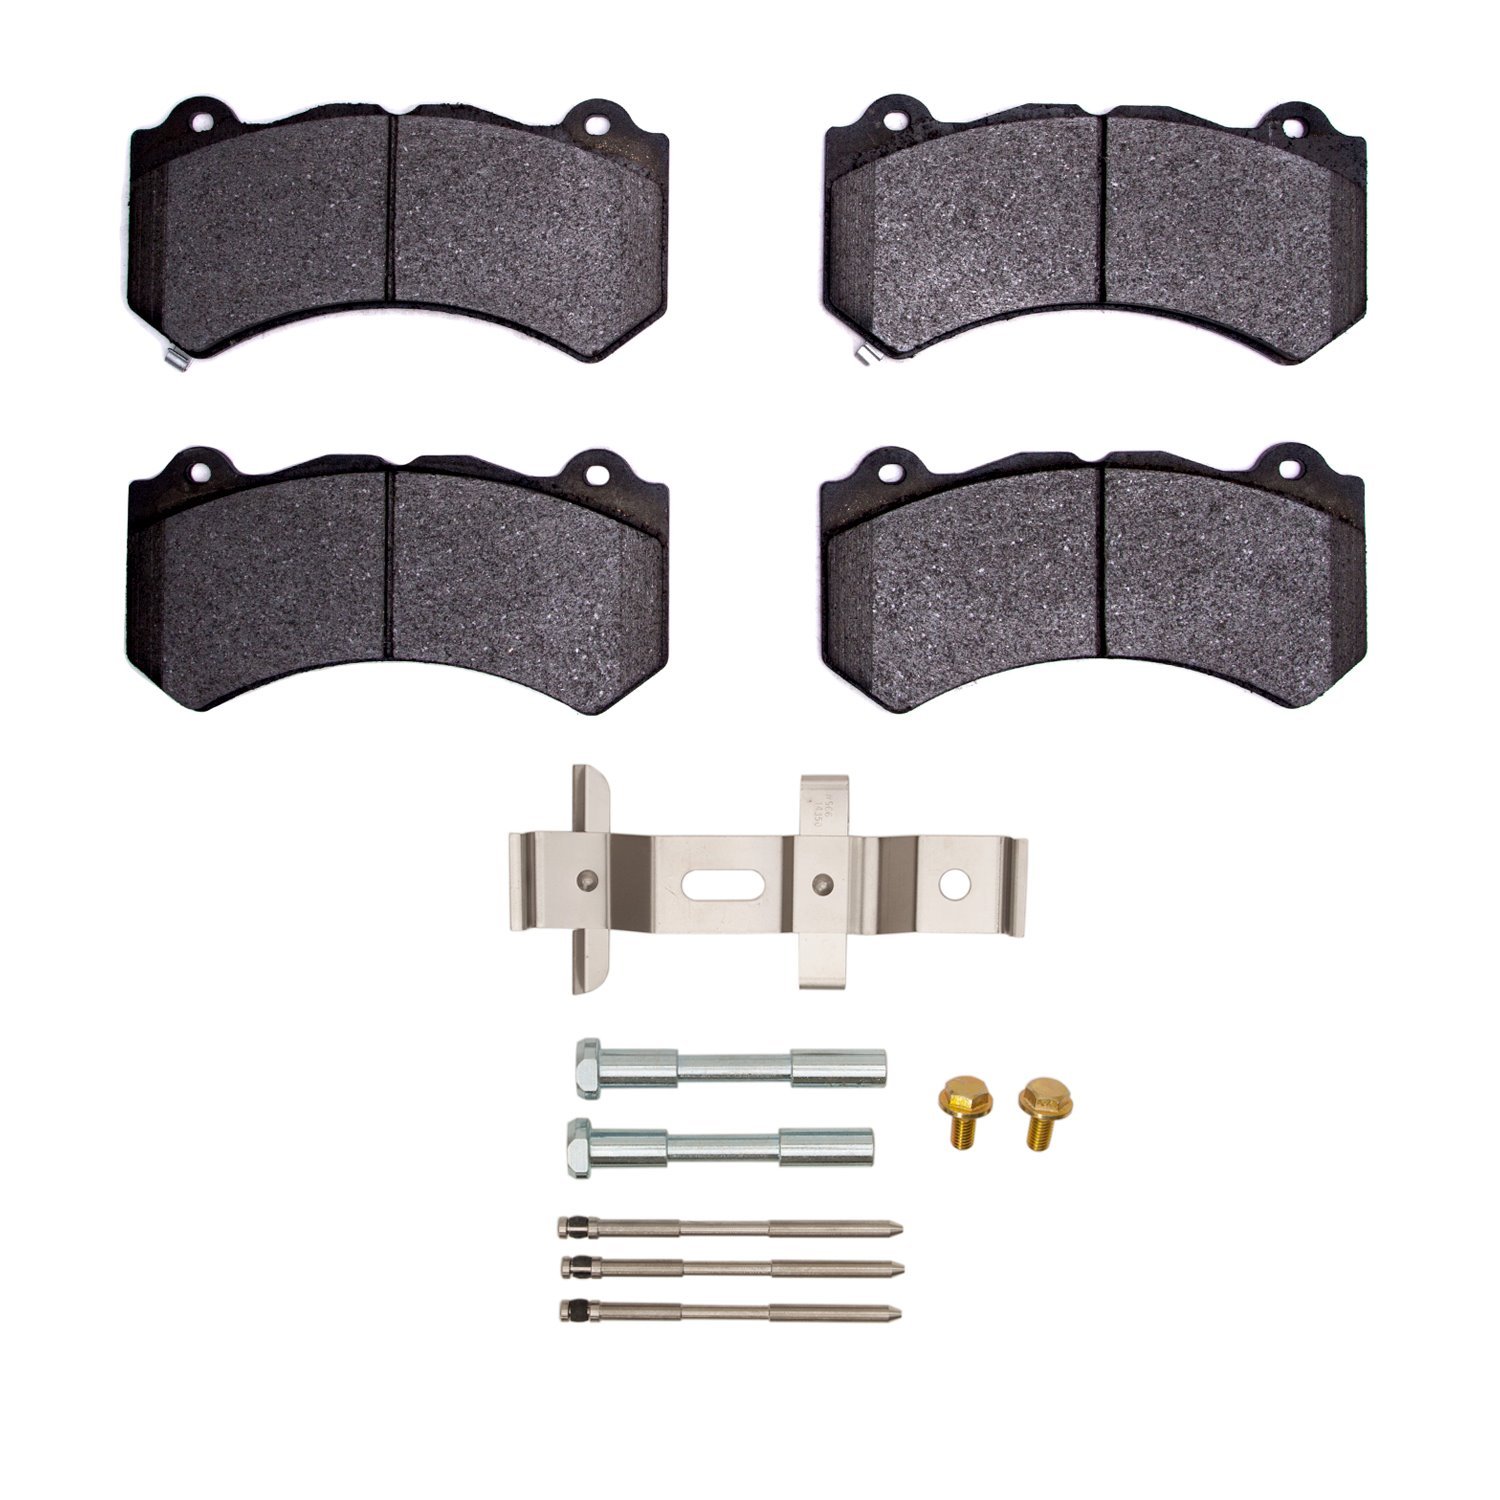 1600-1405-01 5000 Euro Ceramic Brake Pads & Hardware Kit, Fits Select Multiple Makes/Models, Position: Front